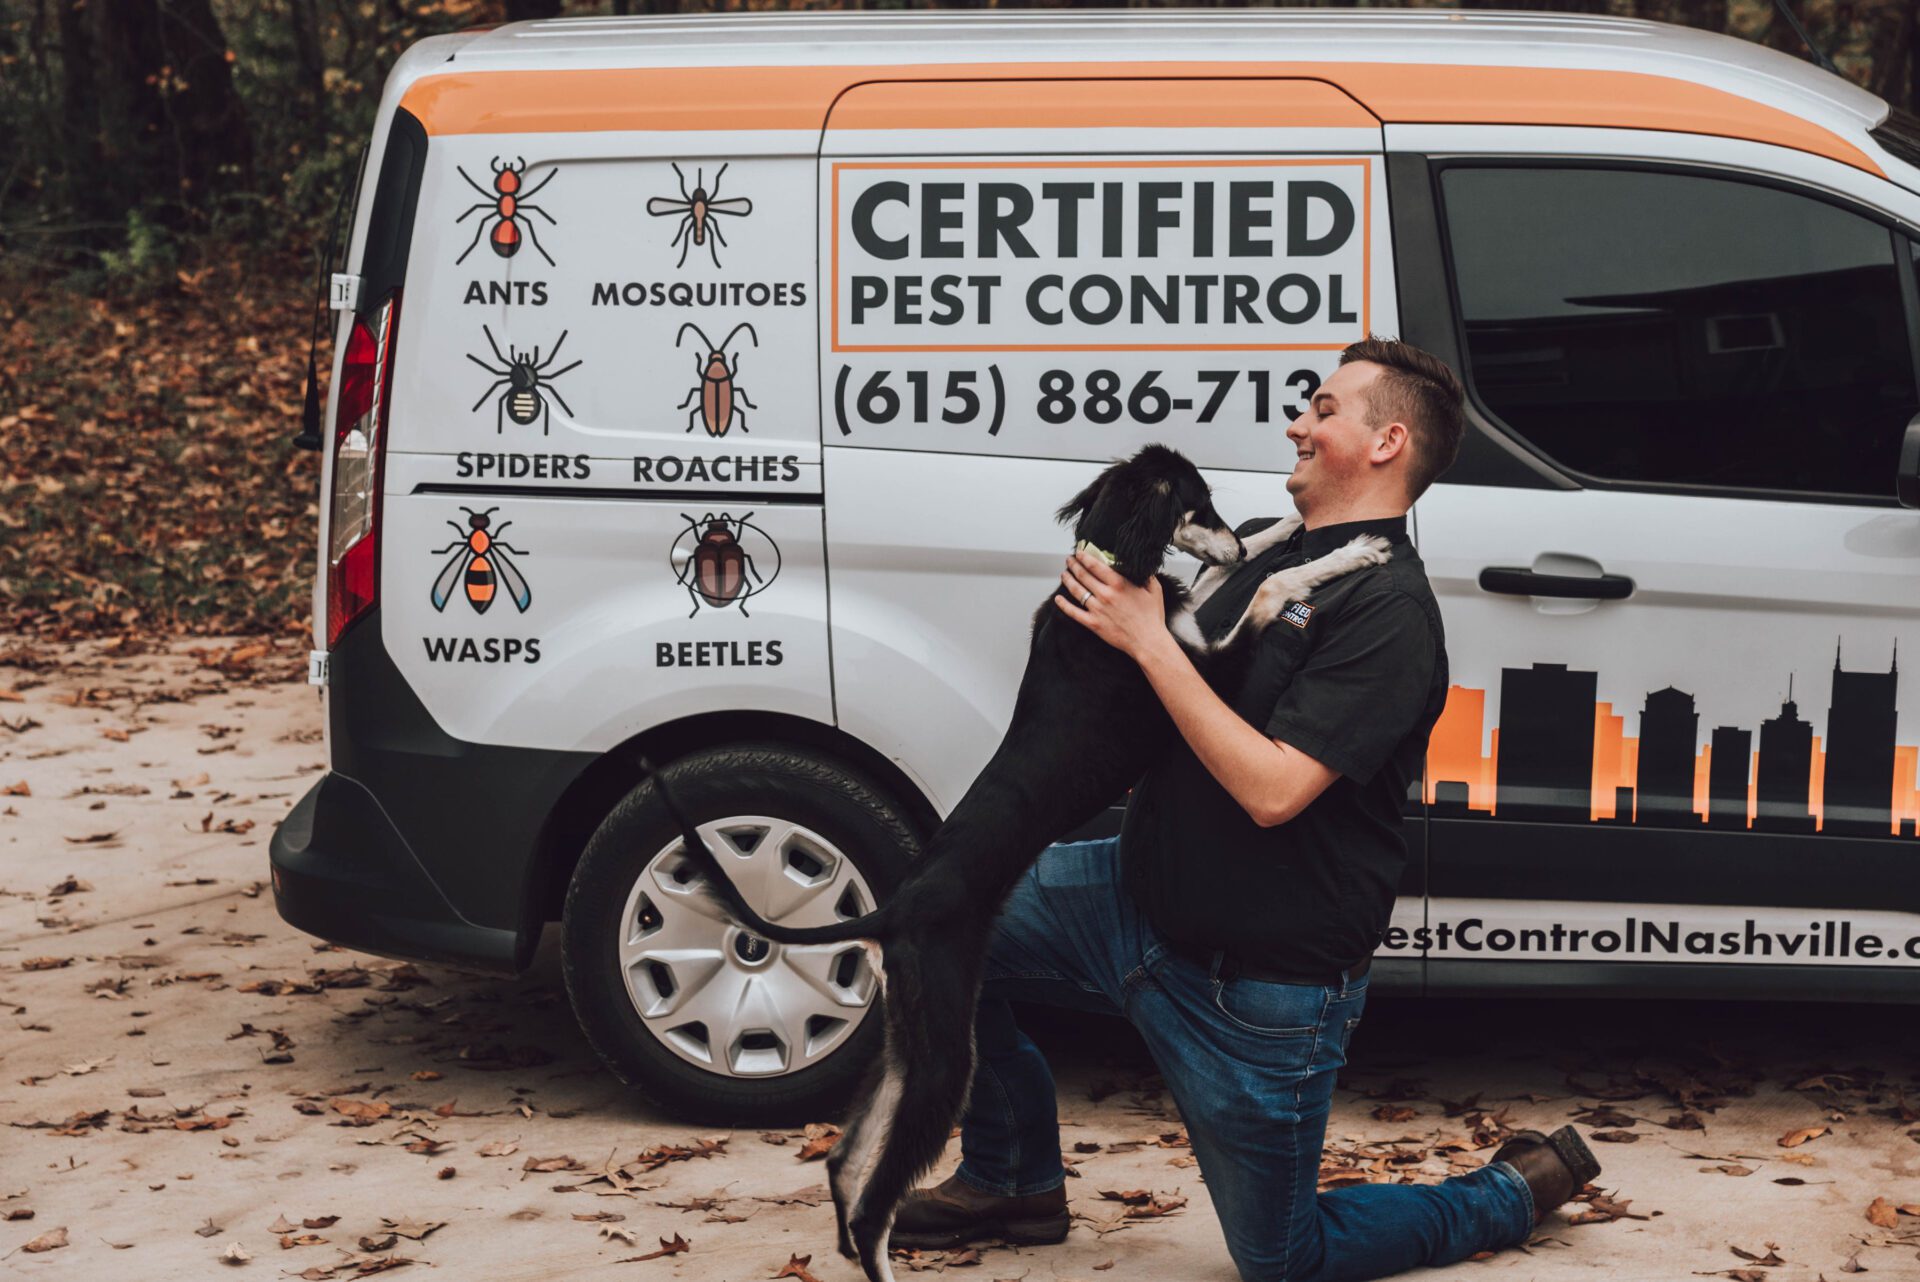 Certified Pest Control - Nashville Exterminator - Ant pest control, mosquito control, spider control, and more